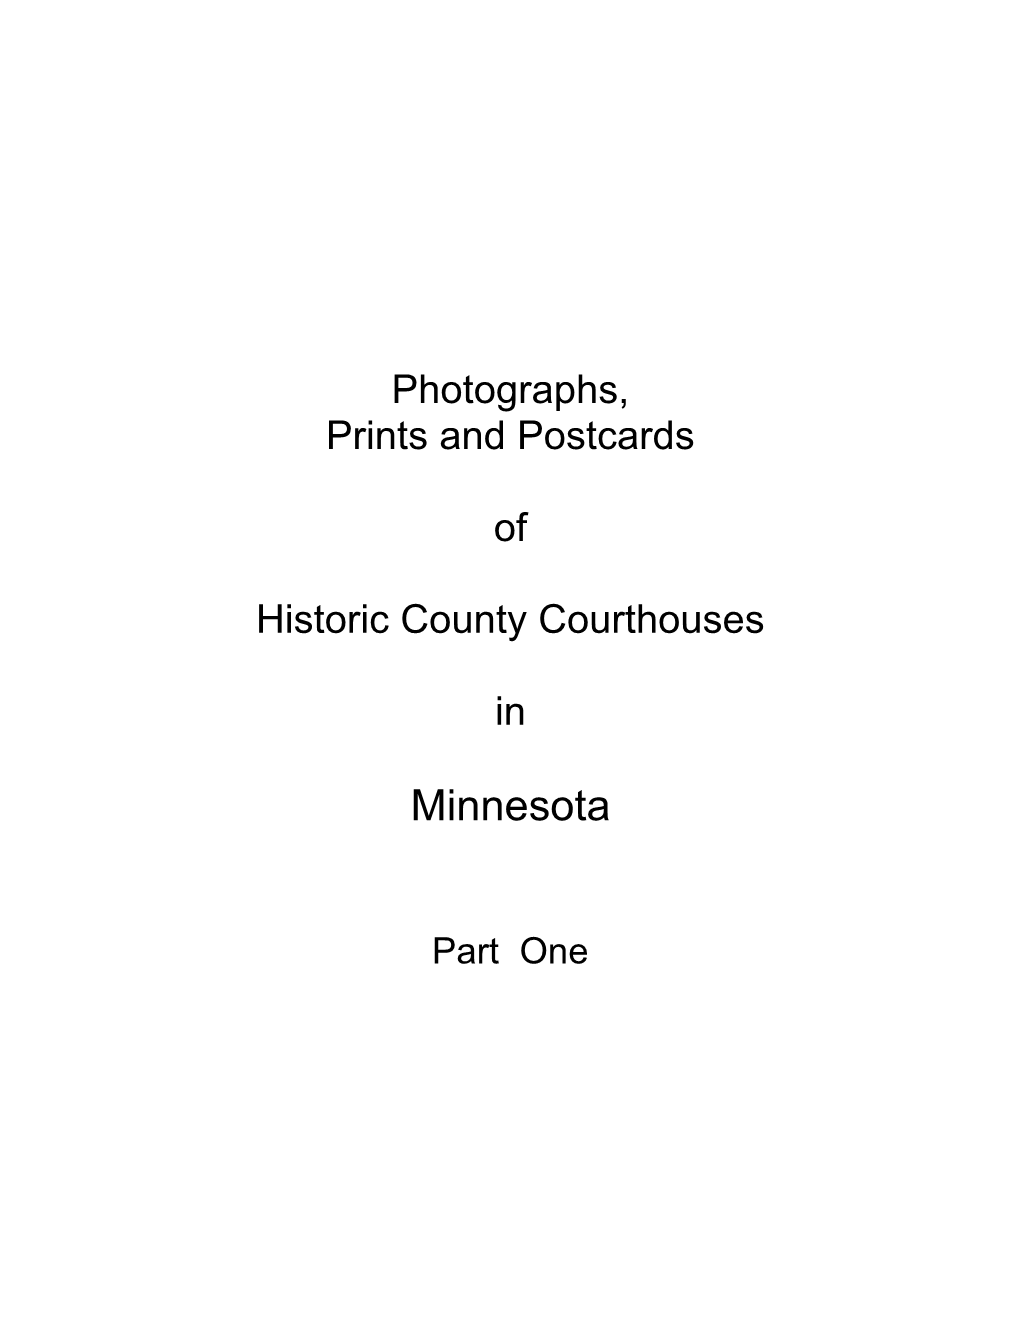 Minnesota Legal History Project: January 1, 2015